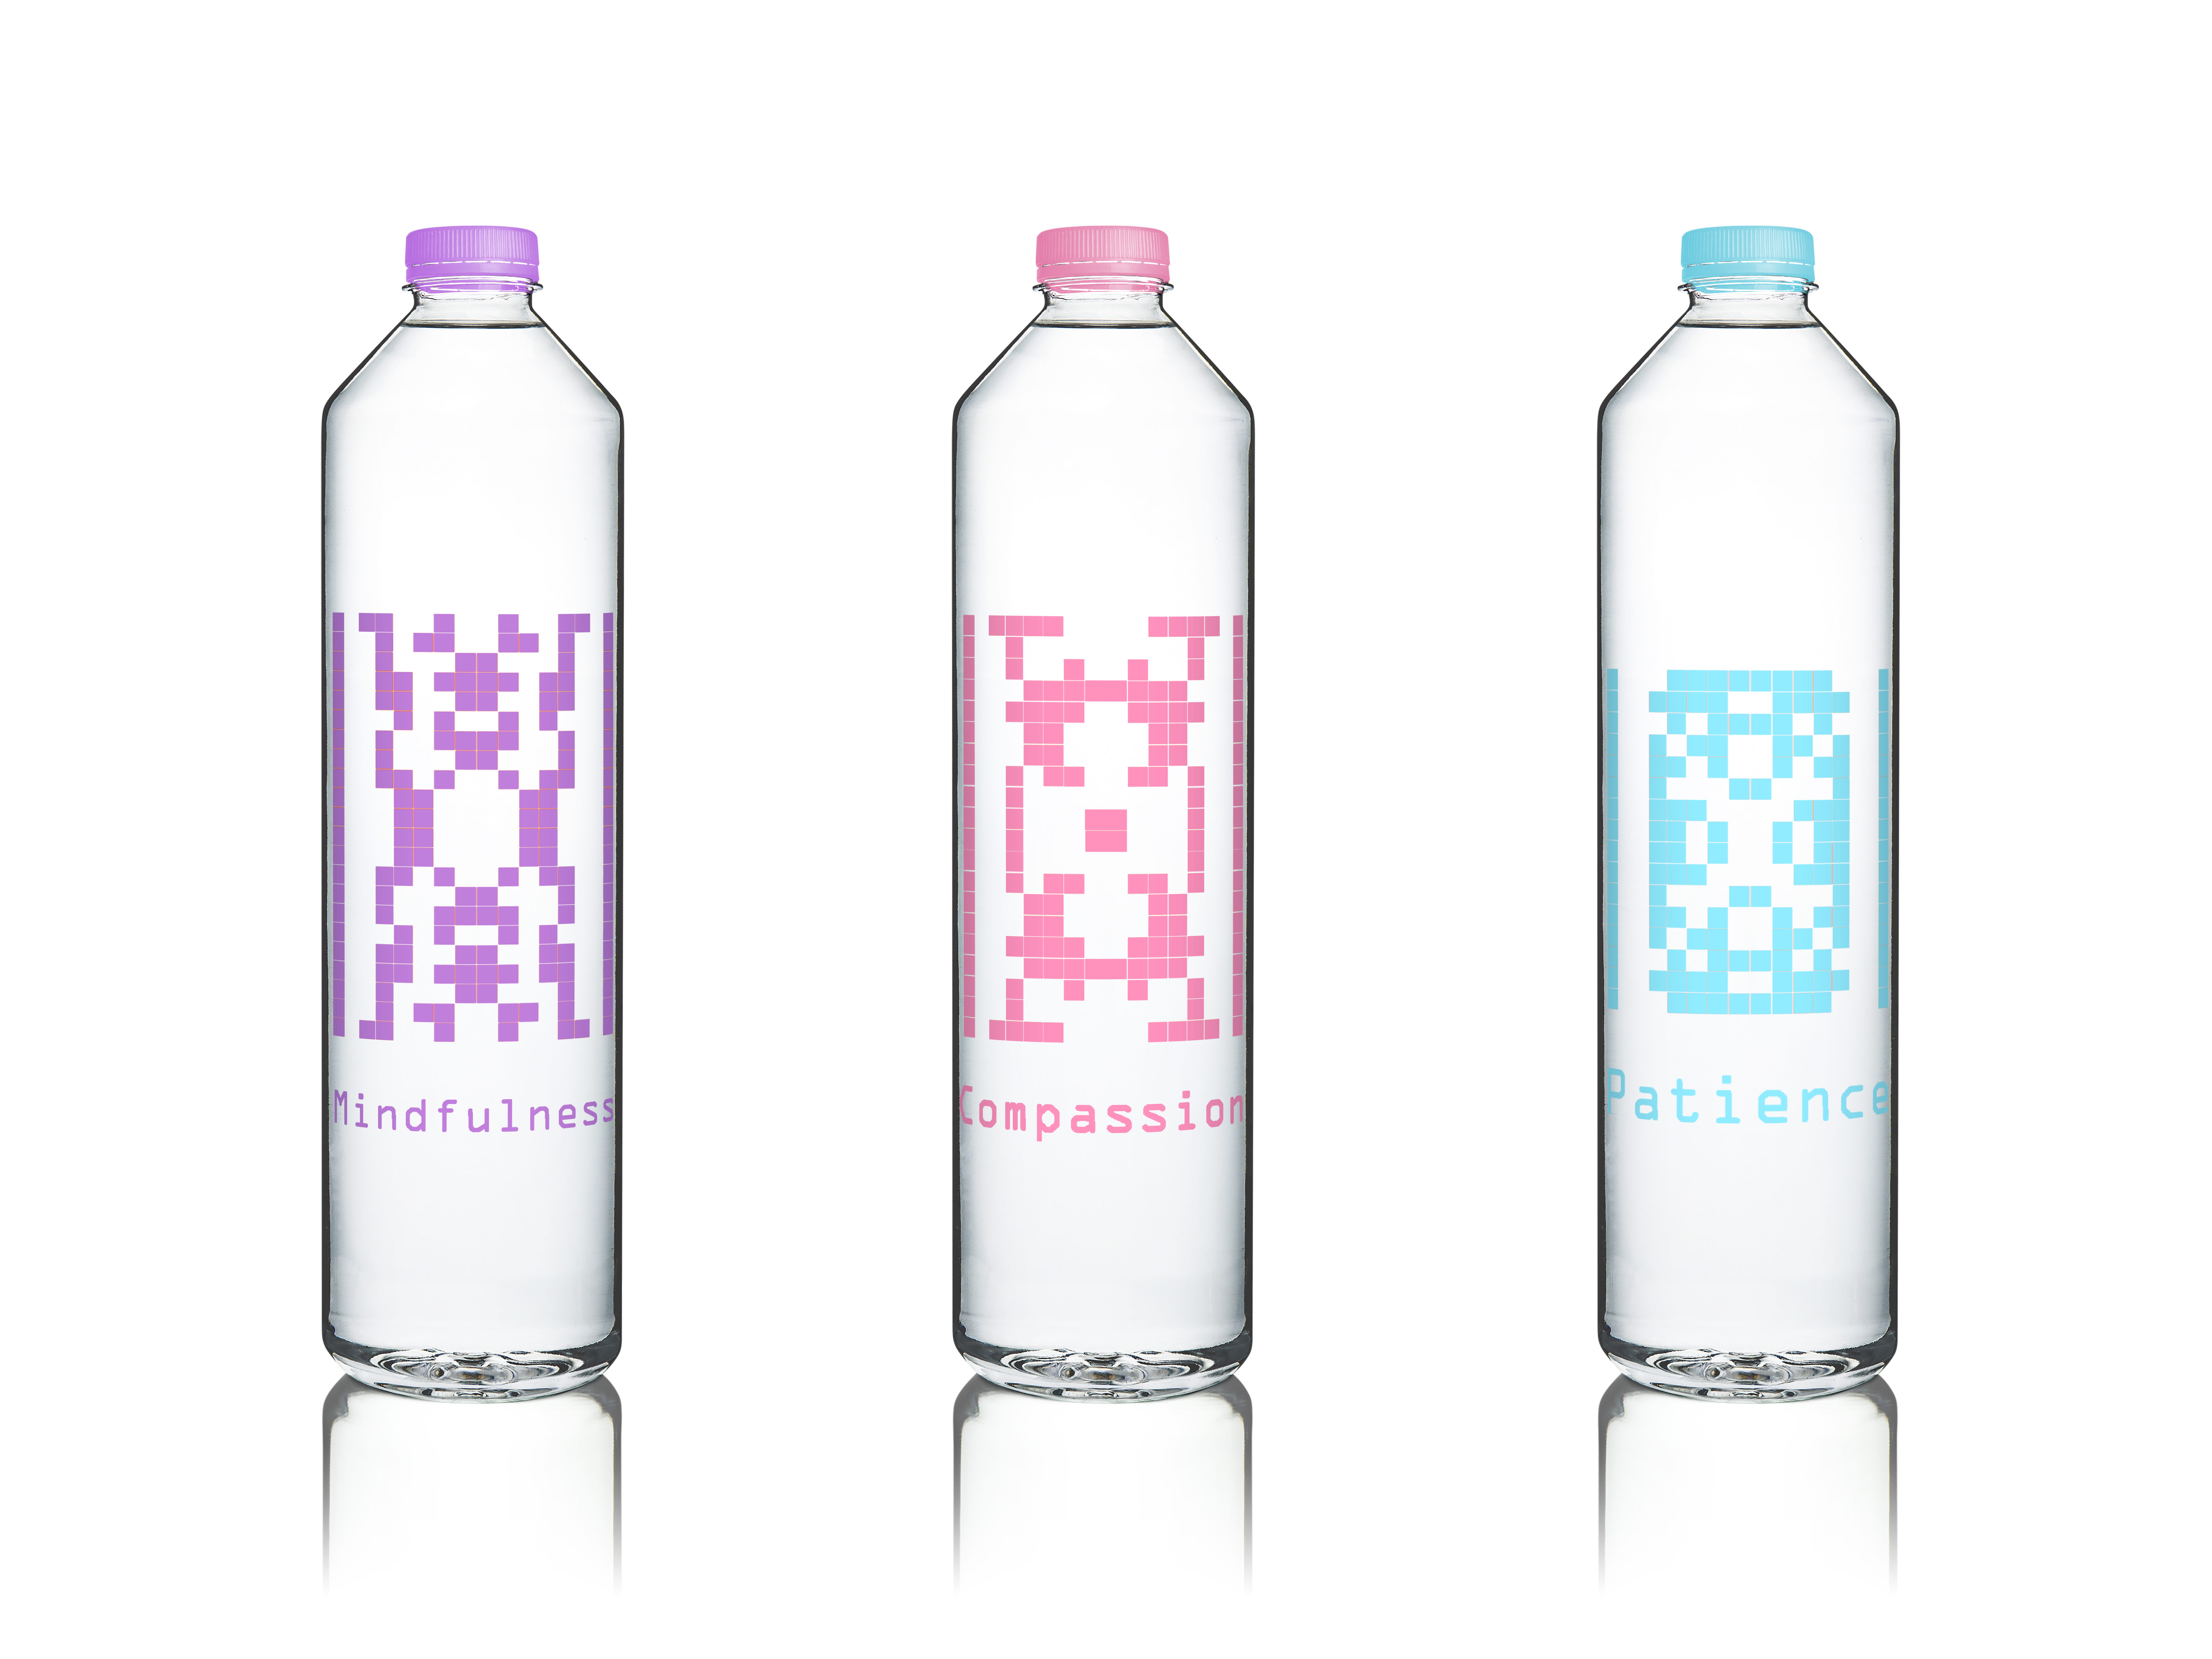 bottles display